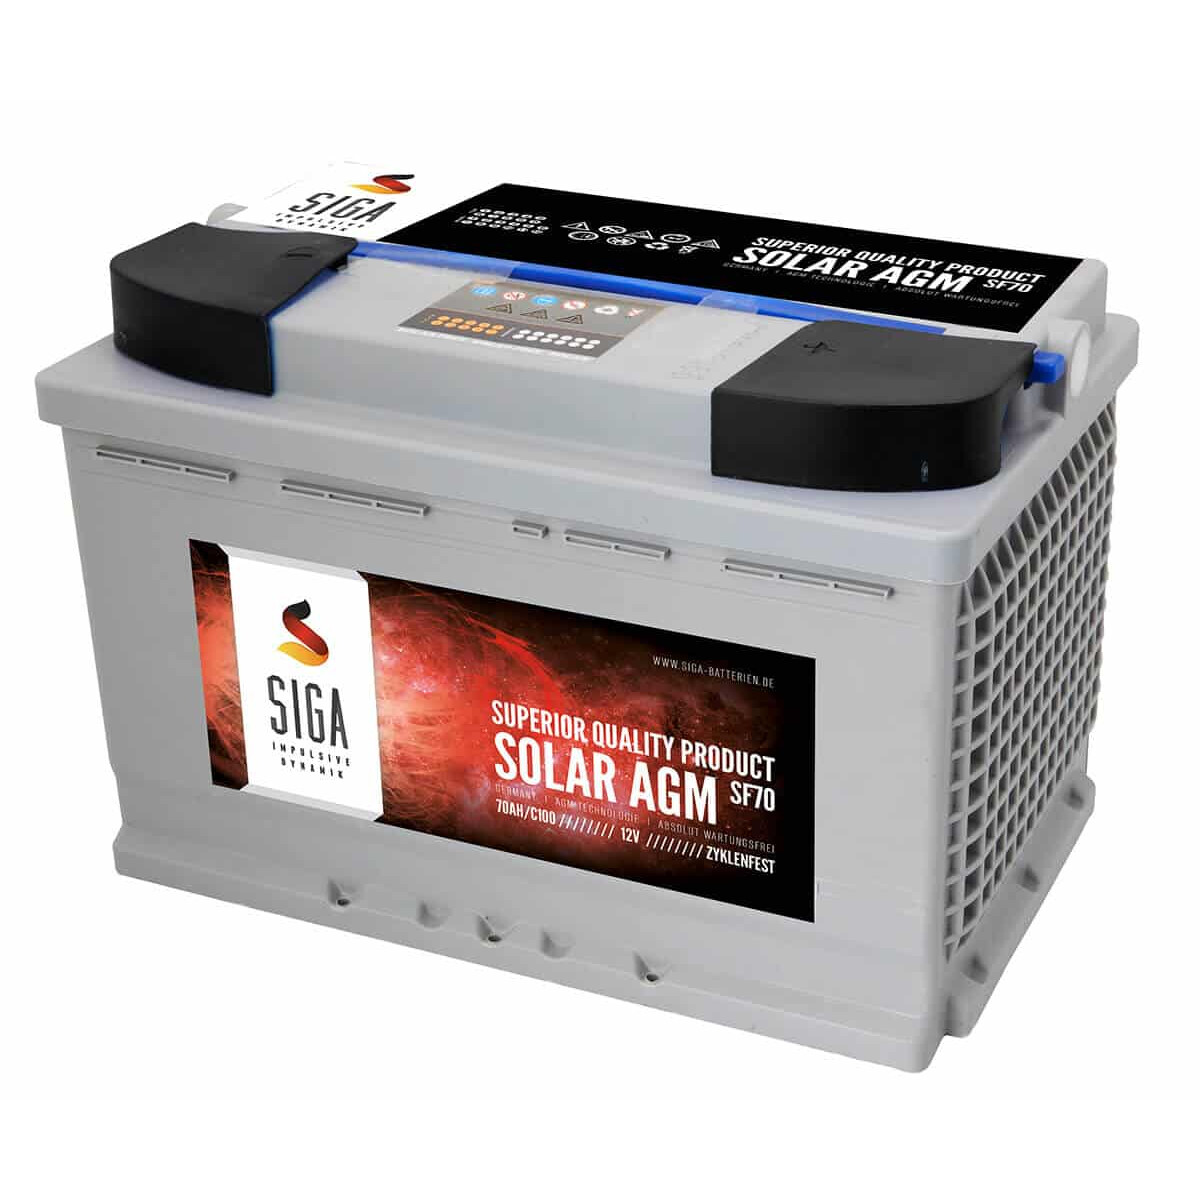 SIGA SOLAR AGM Batterie SF70 12V 70Ah online kaufen bei